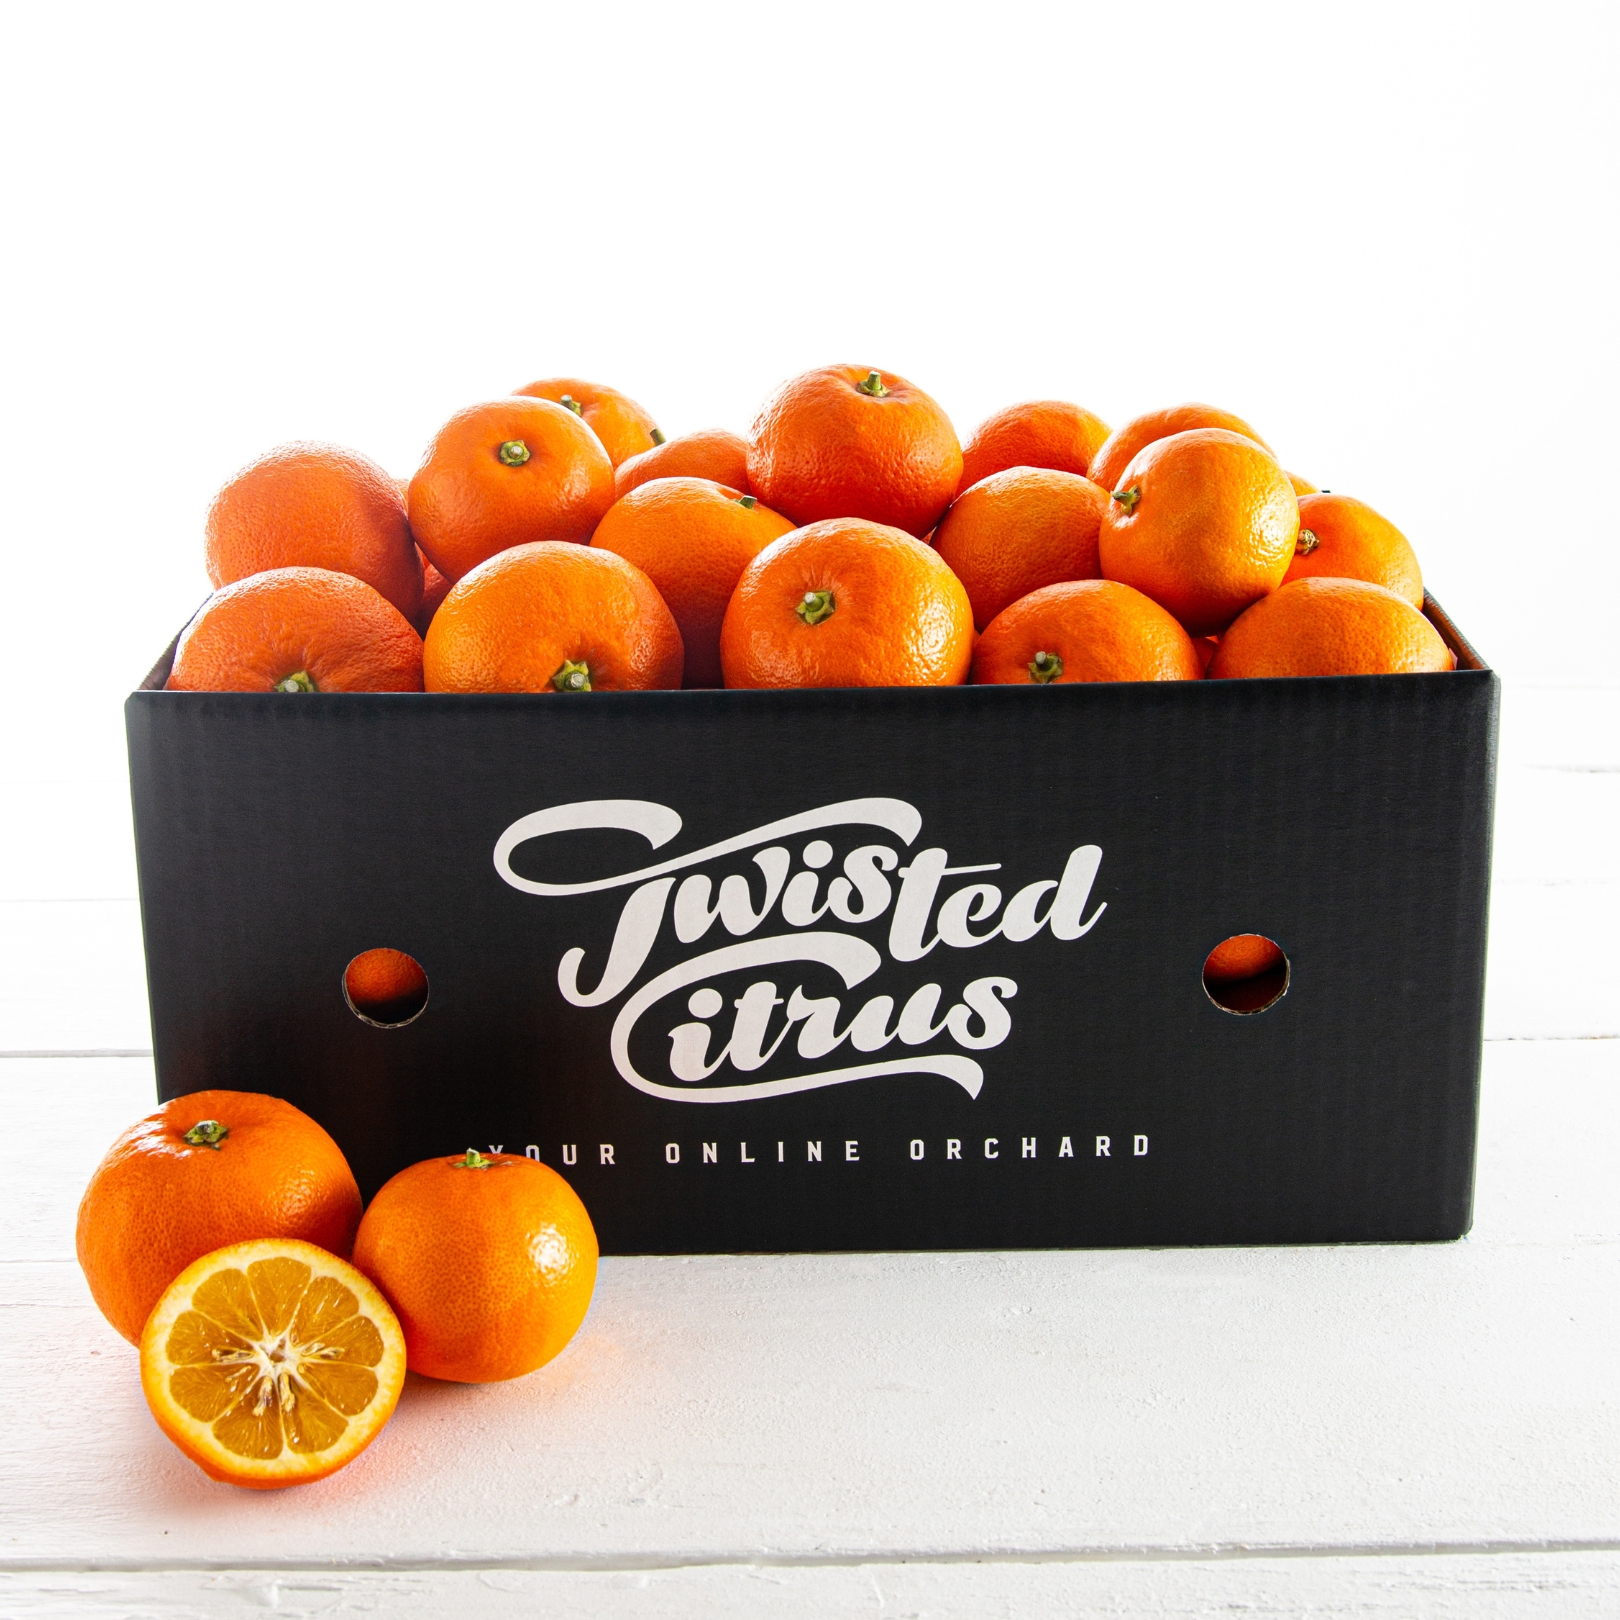 Buy Seville Oranges Online NZ - Twisted Citrus